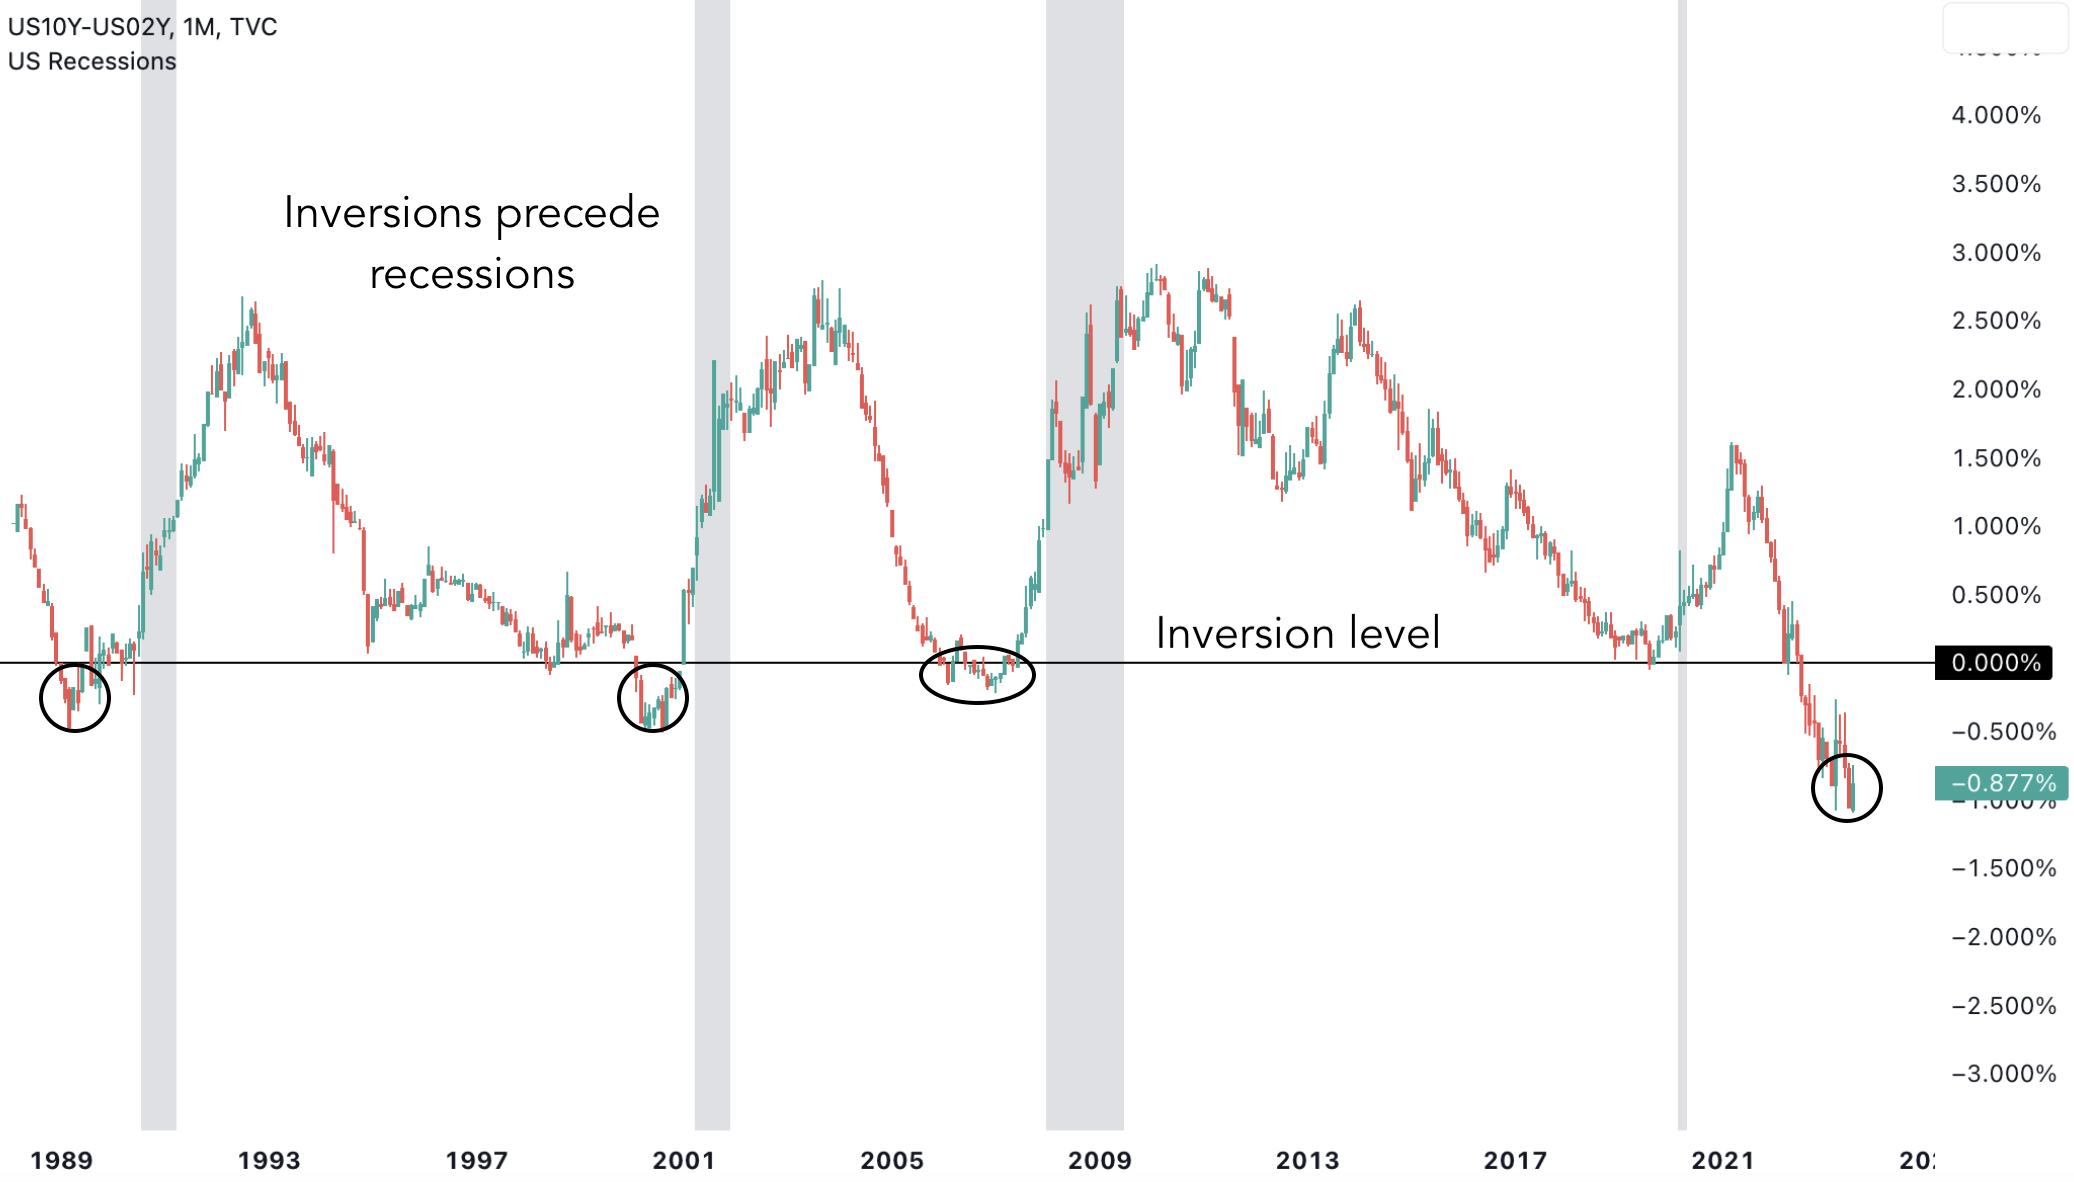 Inversion precede recessions